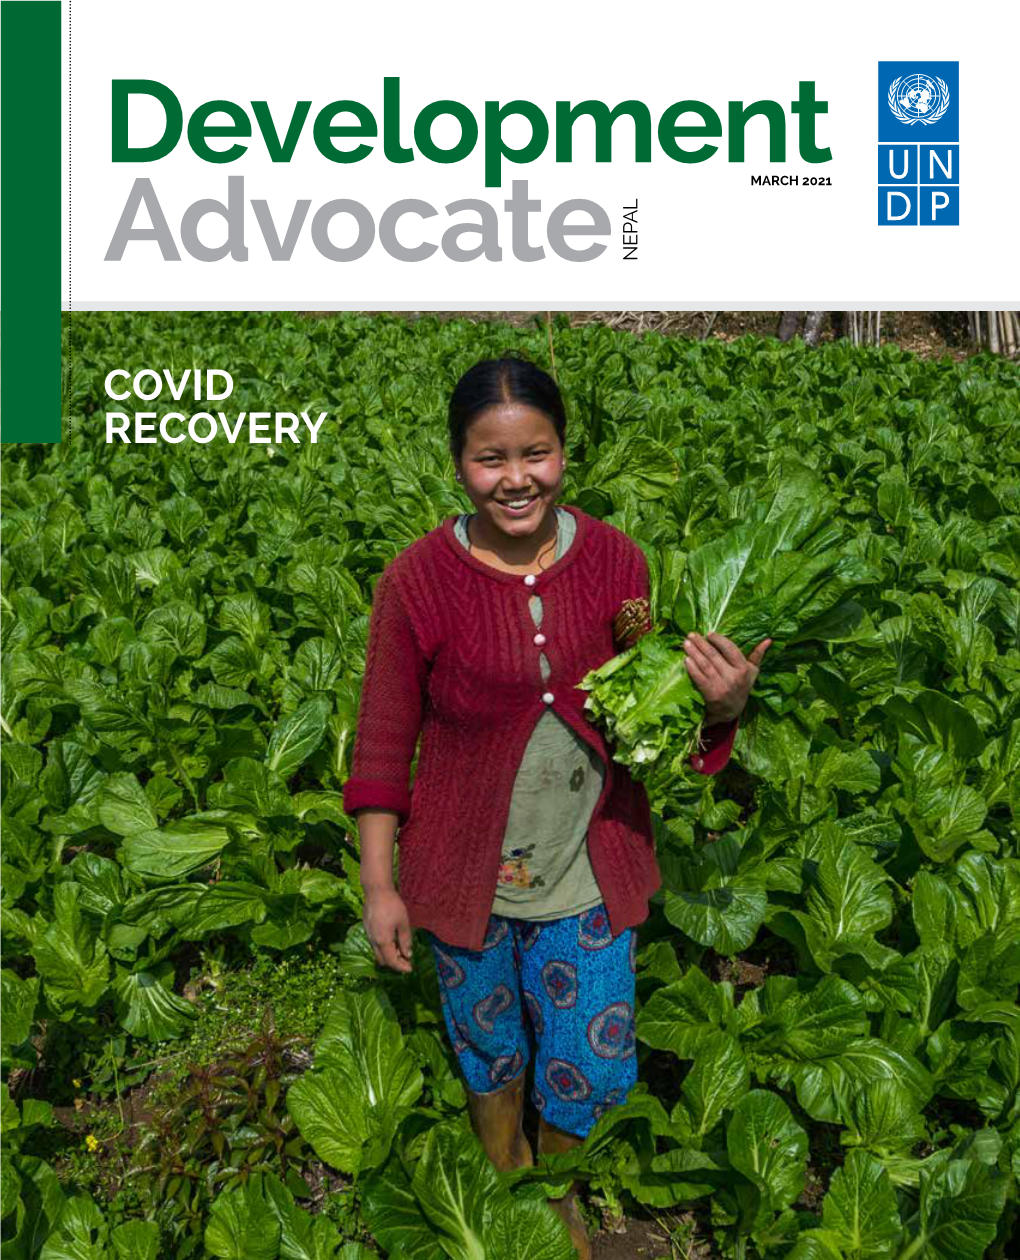 COVID RECOVERY 2 / Development Advocate Nepal